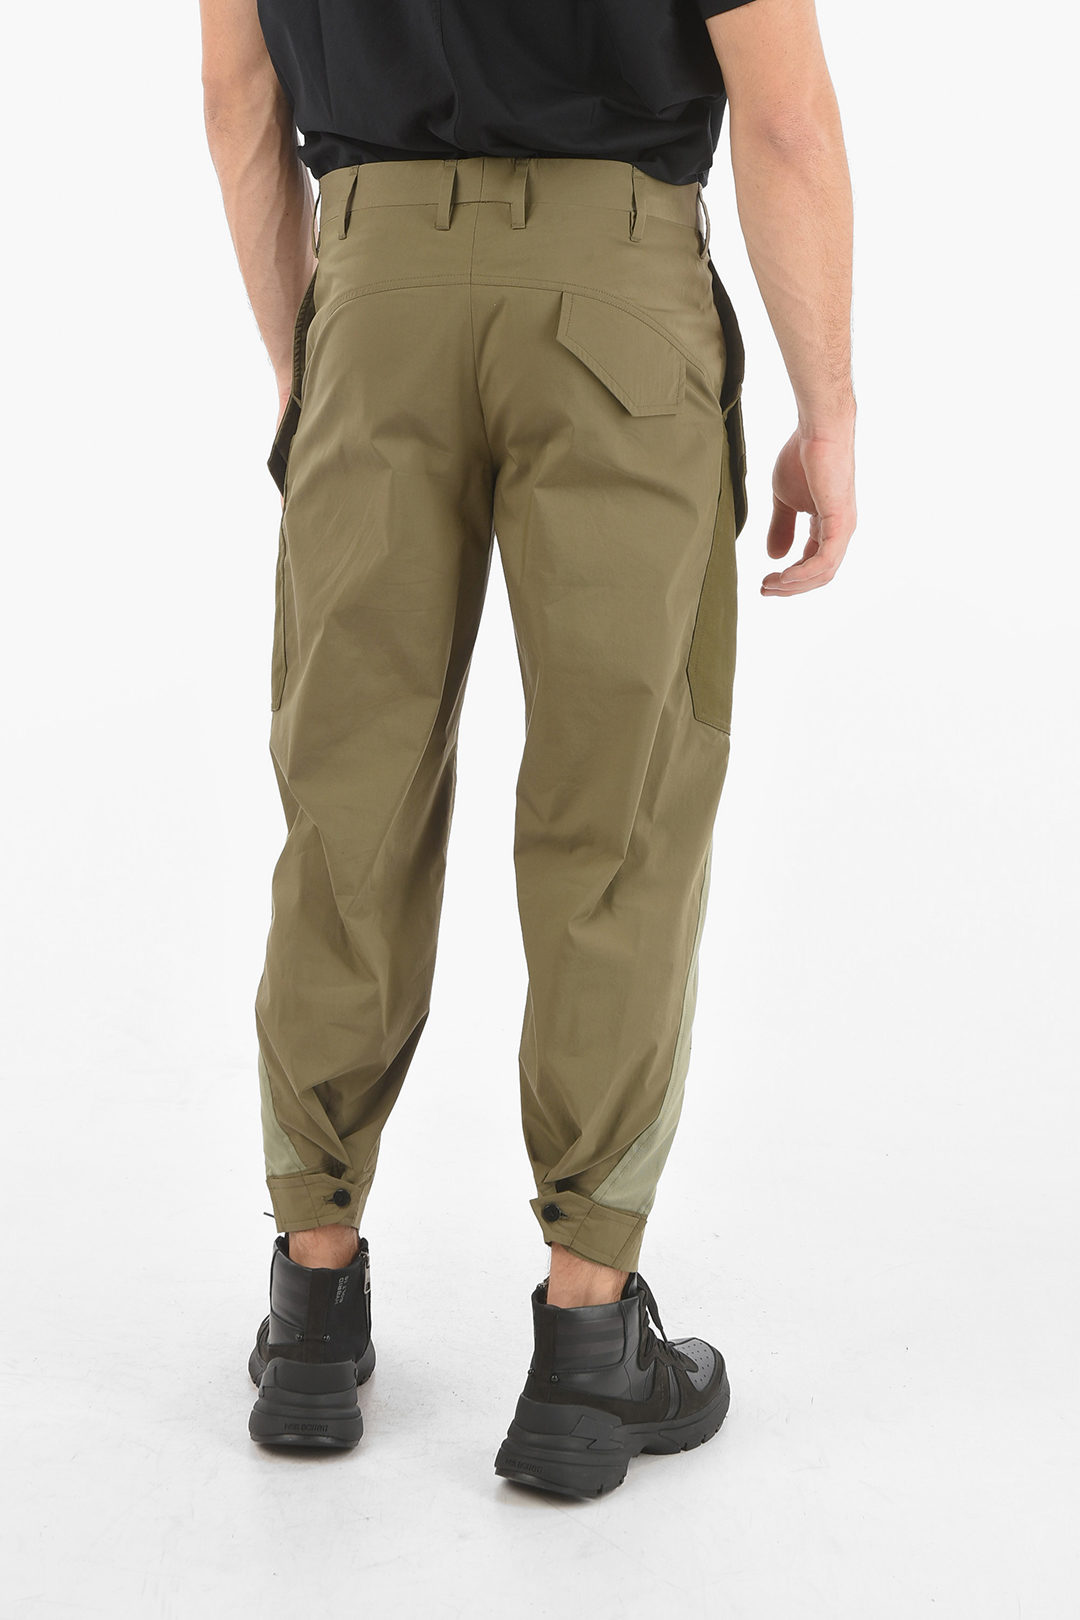 Jersey Pocket LOOSE FIT Nylon Cargo Pants